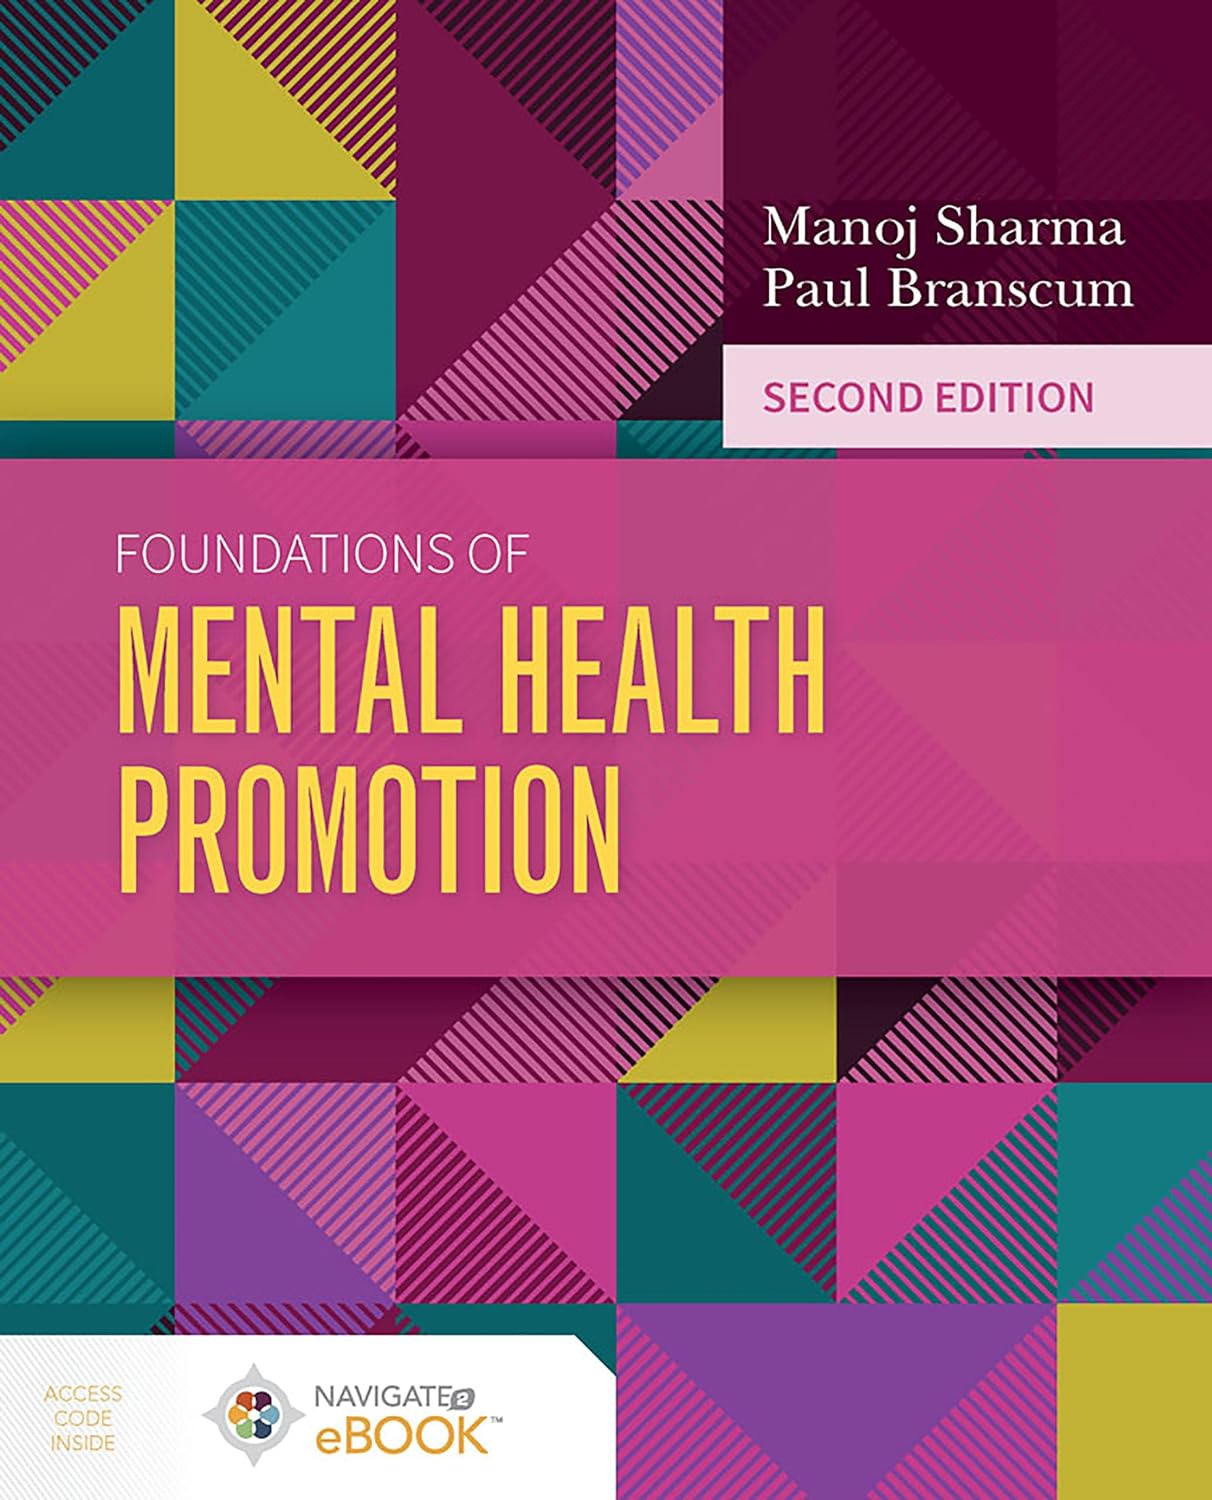 (EBook PDF)Foundations of Mental Health Promotion 2nd Edition by Manoj Sharma, Paul Branscum